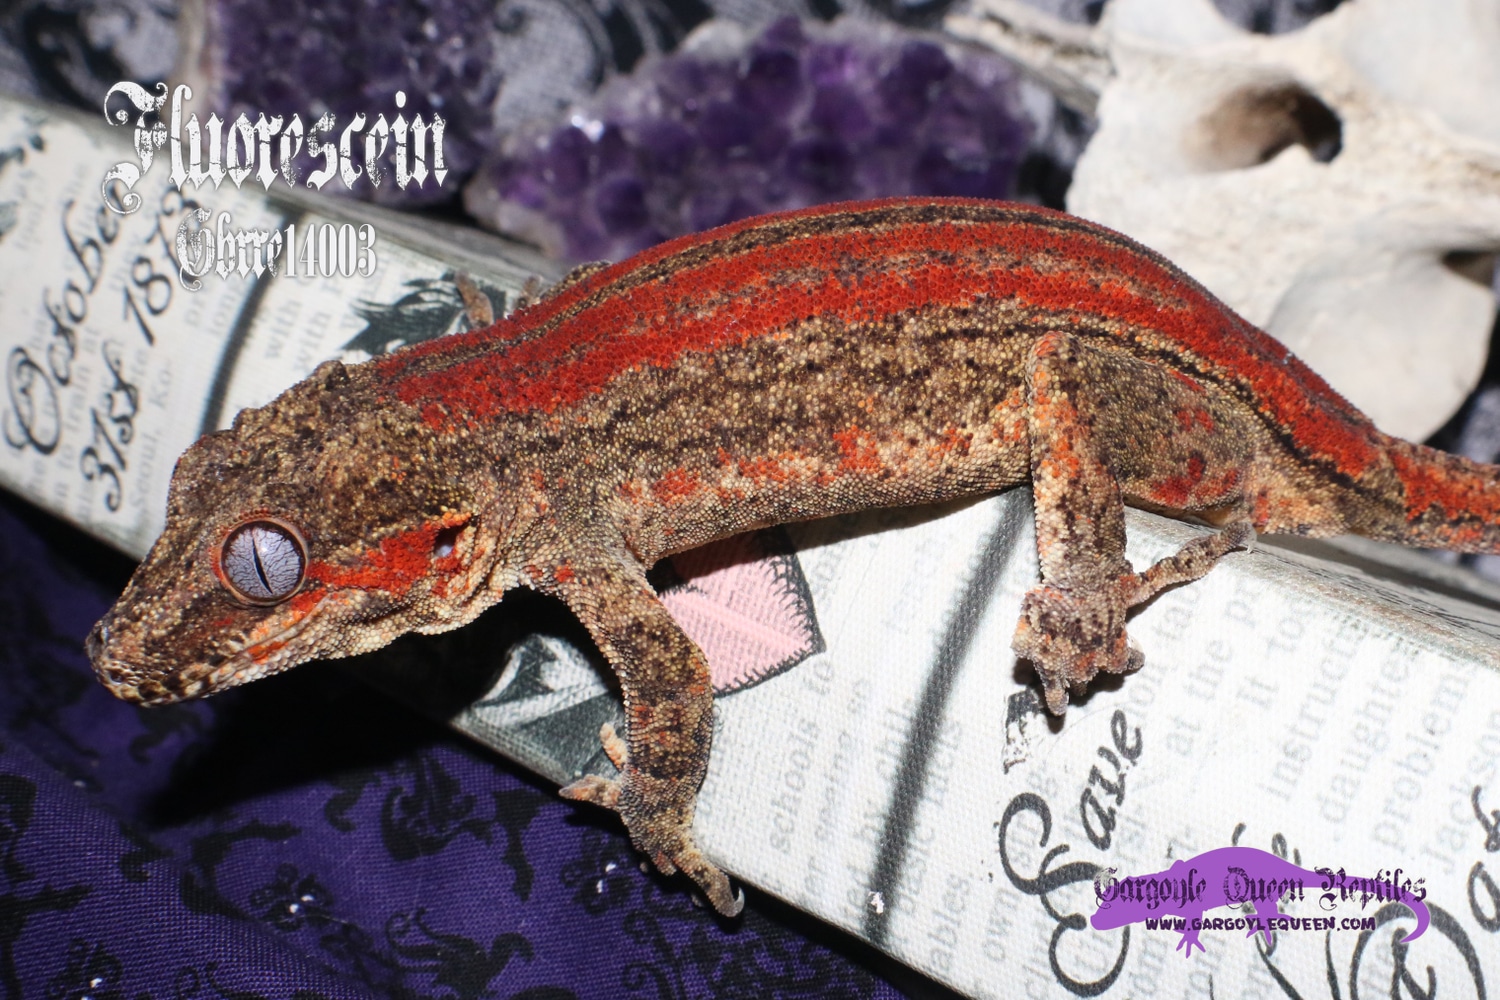 "Fluorescein" Red Stripe Gargoyle Gecko by Gargoyle Queen Reptiles